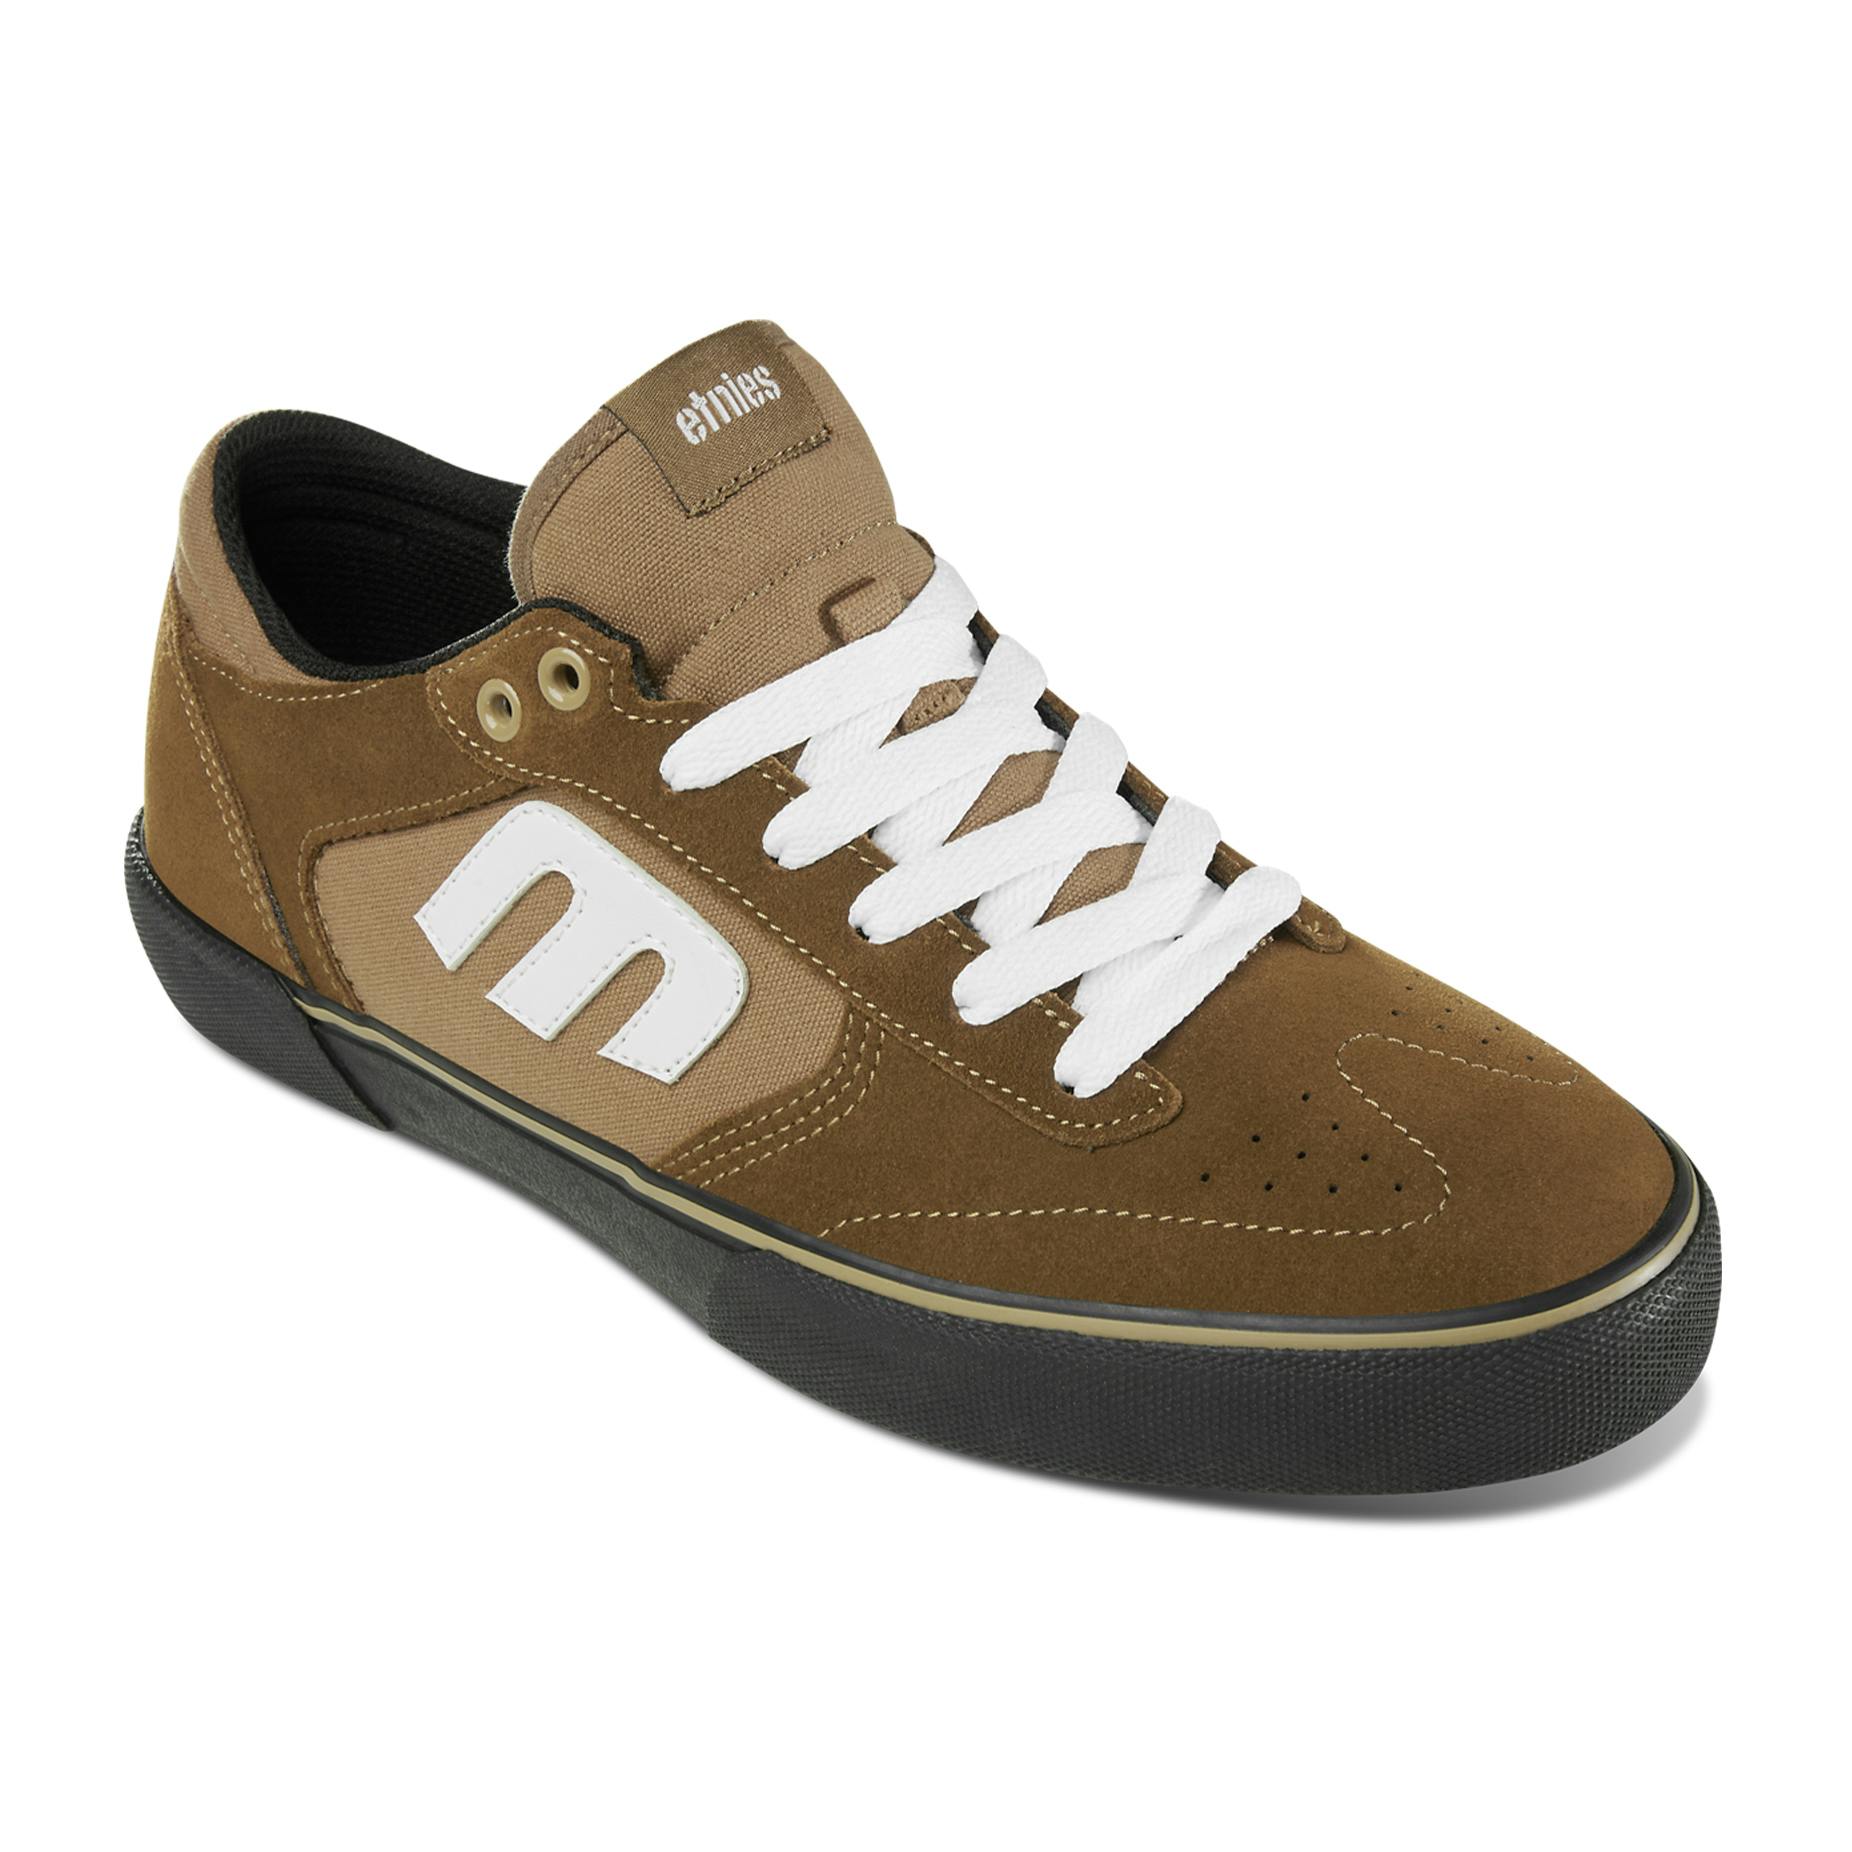 etnies Windrow Vulc Skate Shoe - Brown/Black/White | BOARDWORLD Store